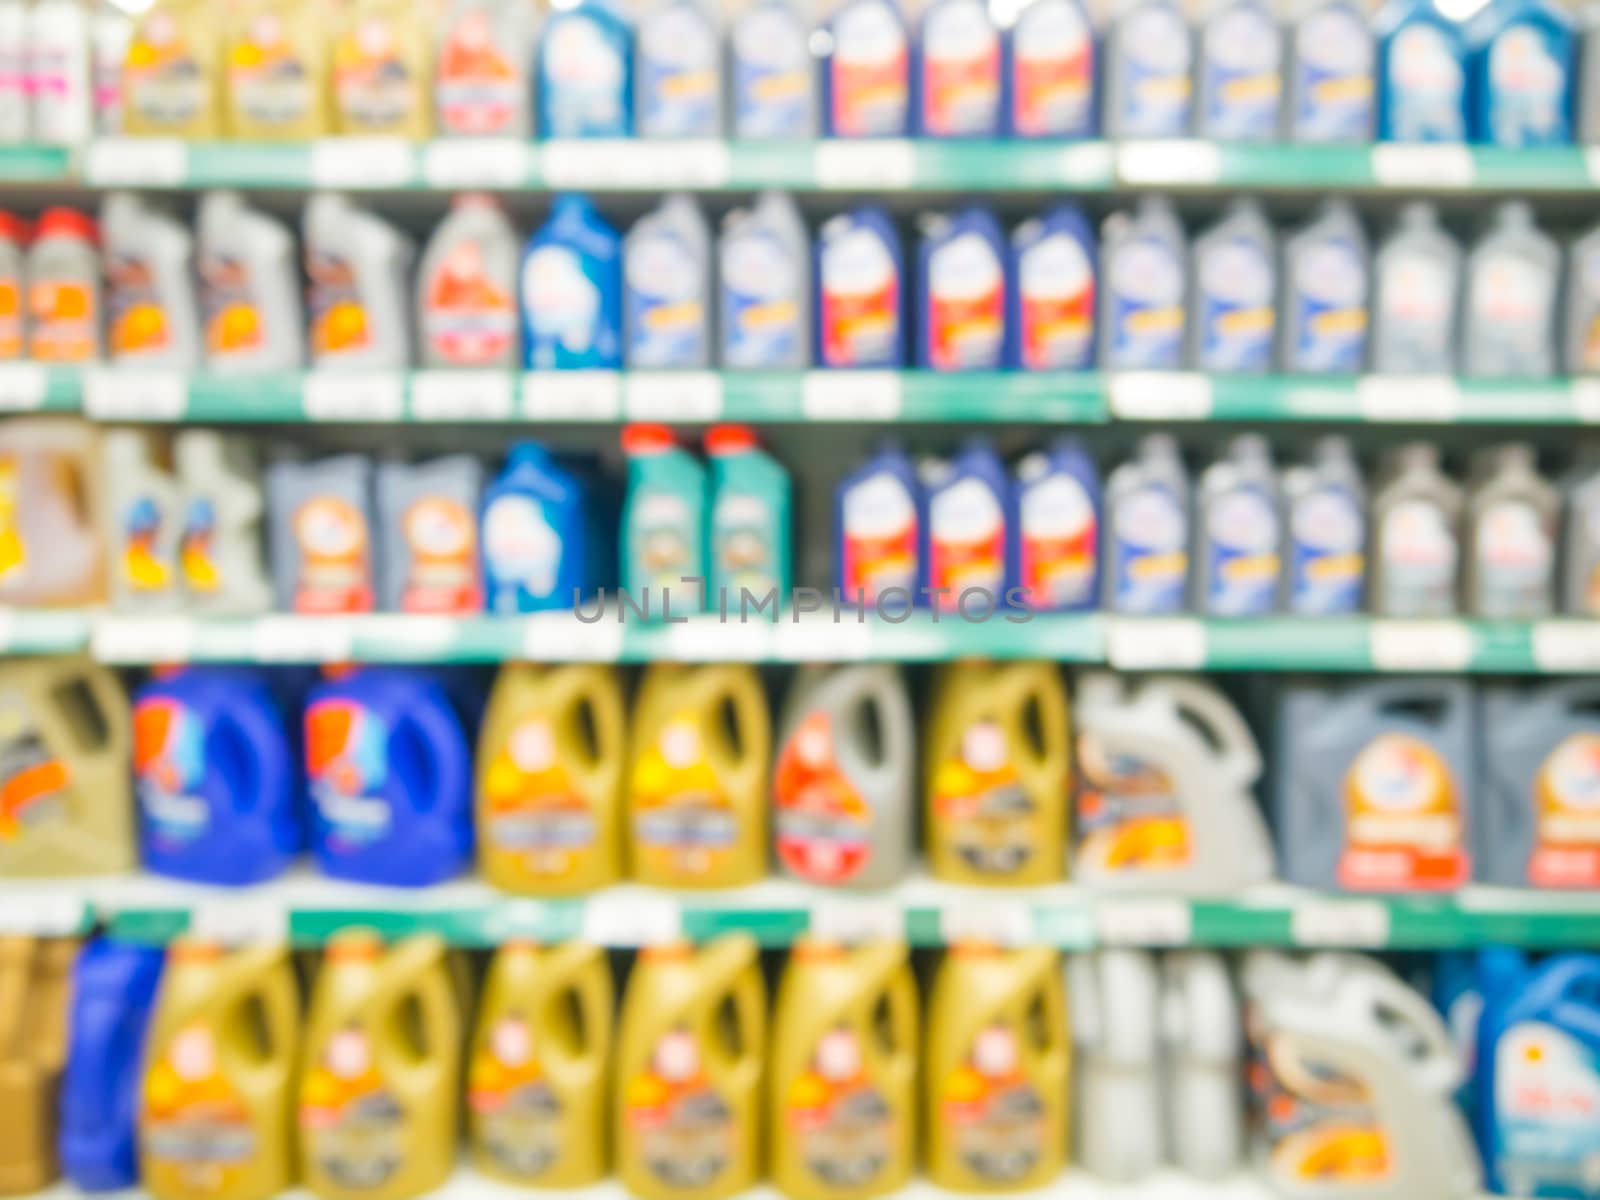 Blurred colorful motor oil bottles on shelves in supermarket as background